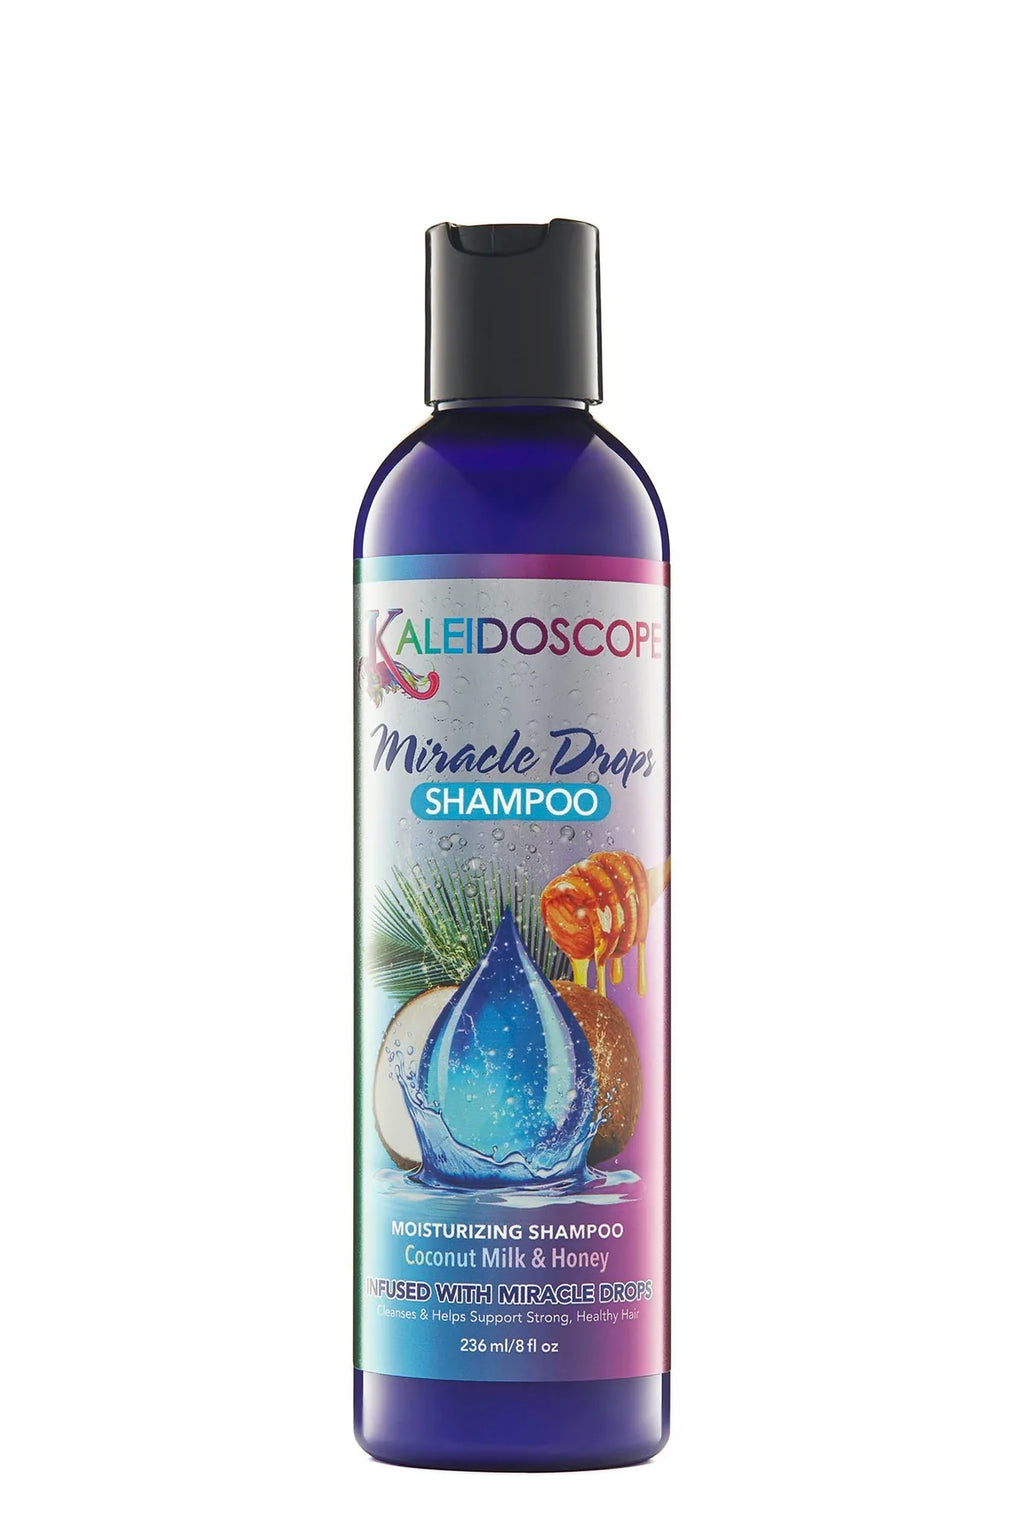 Kaleidoscope Miracle Drops Shampoo 8oz